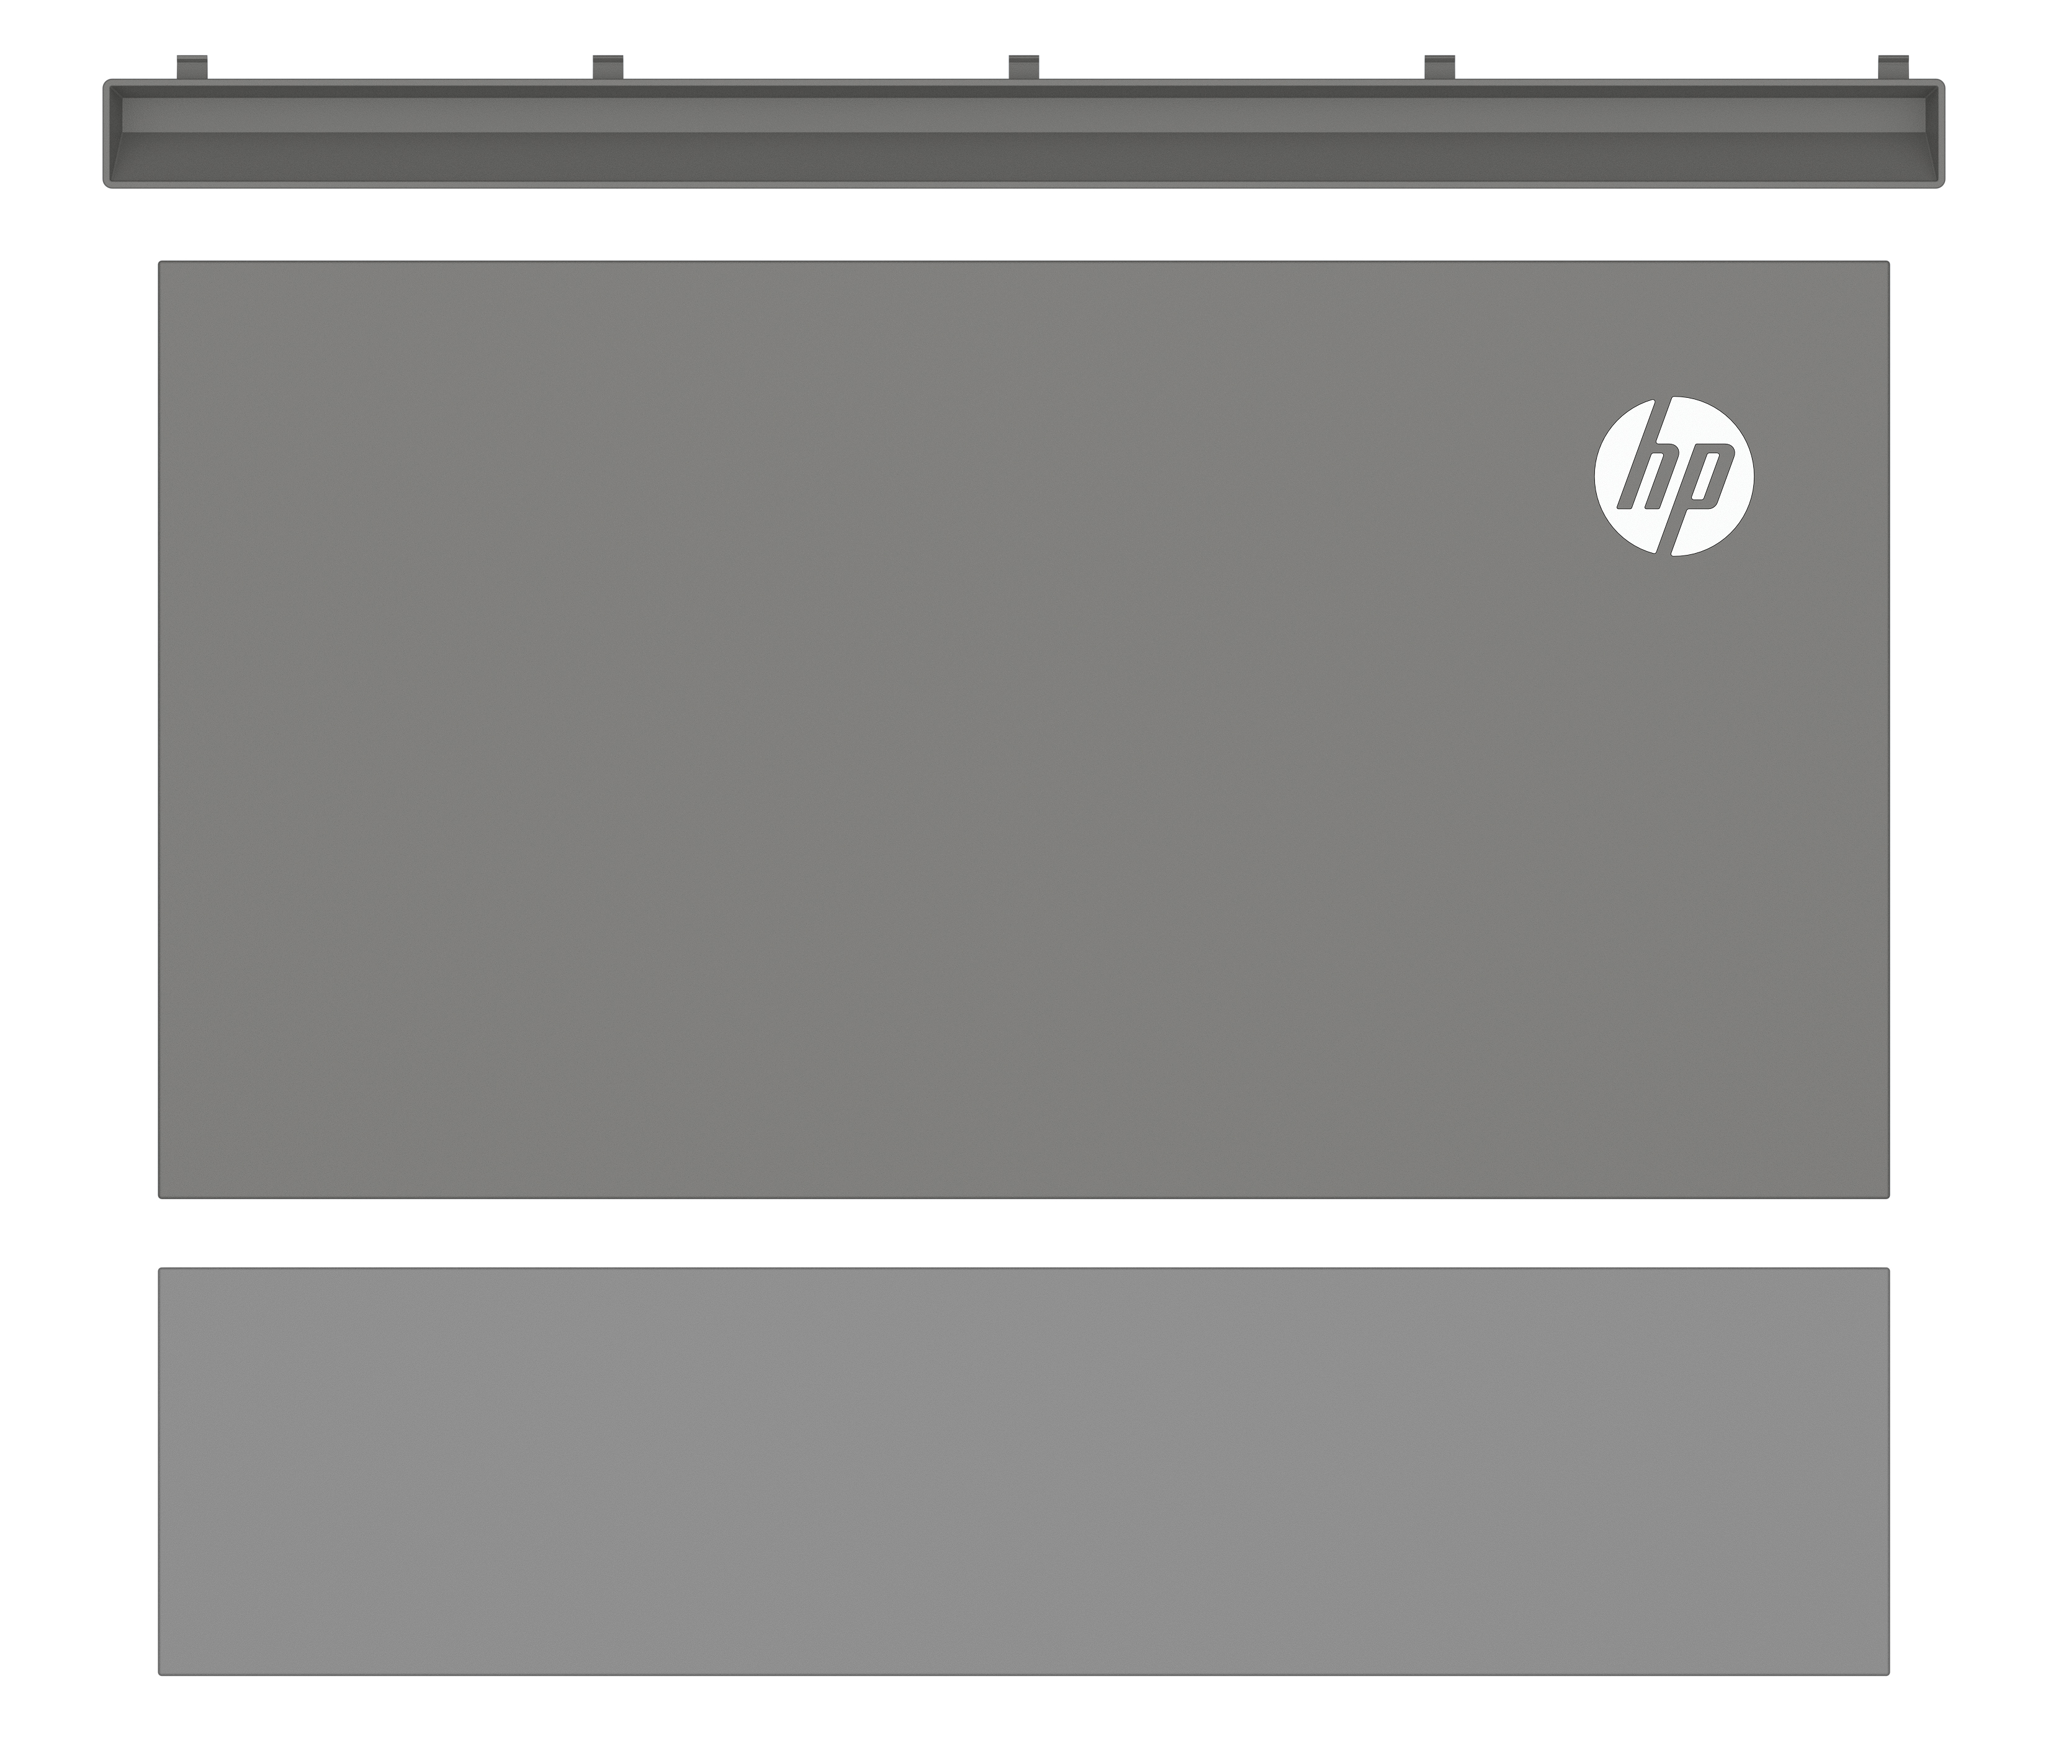 Bild von HP Color LaserJet X580 Farbmonitor, Constellation-Kit, Lunar-Grau, HP, HP Color LaserJet Enterprise MFP X58045dn 7E357A; HP Color LaserJet Enterprise Flow MFP X58045z..., China, 457,6 mm, 20 mm, 247,9 mm